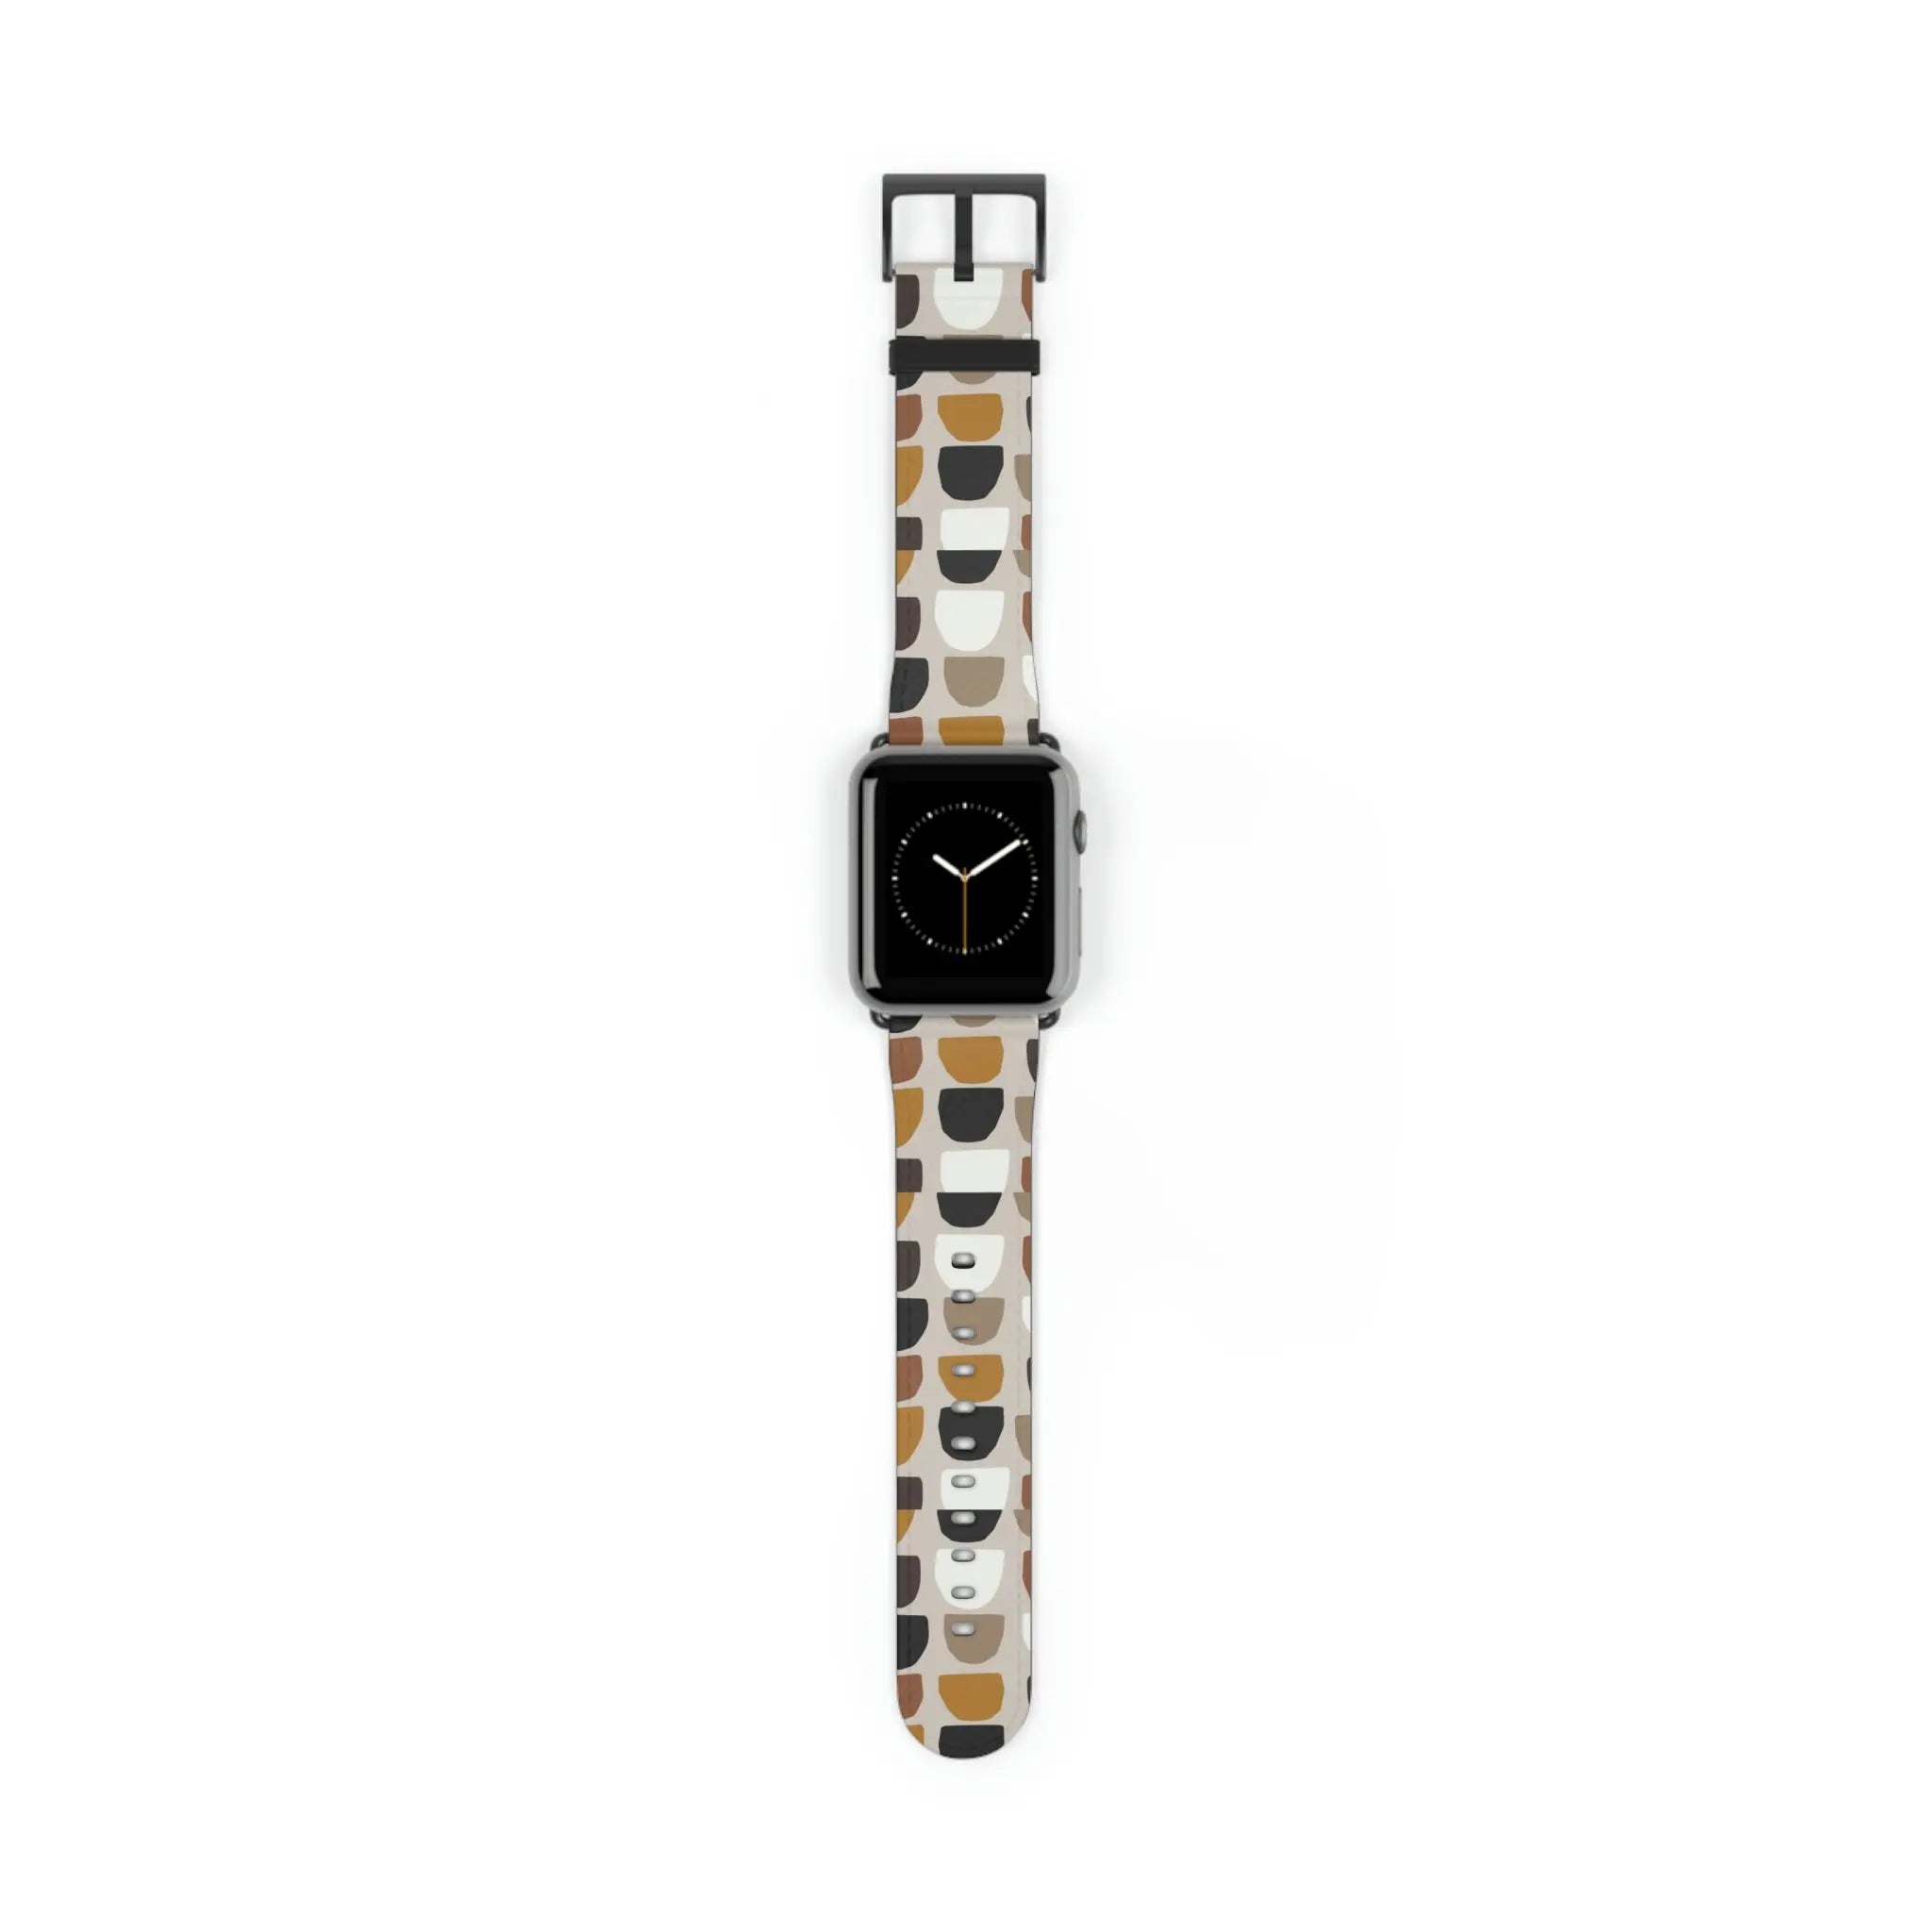  Boho (Khaki) Apple Watch Band Accessories42-45mmBlackMatte